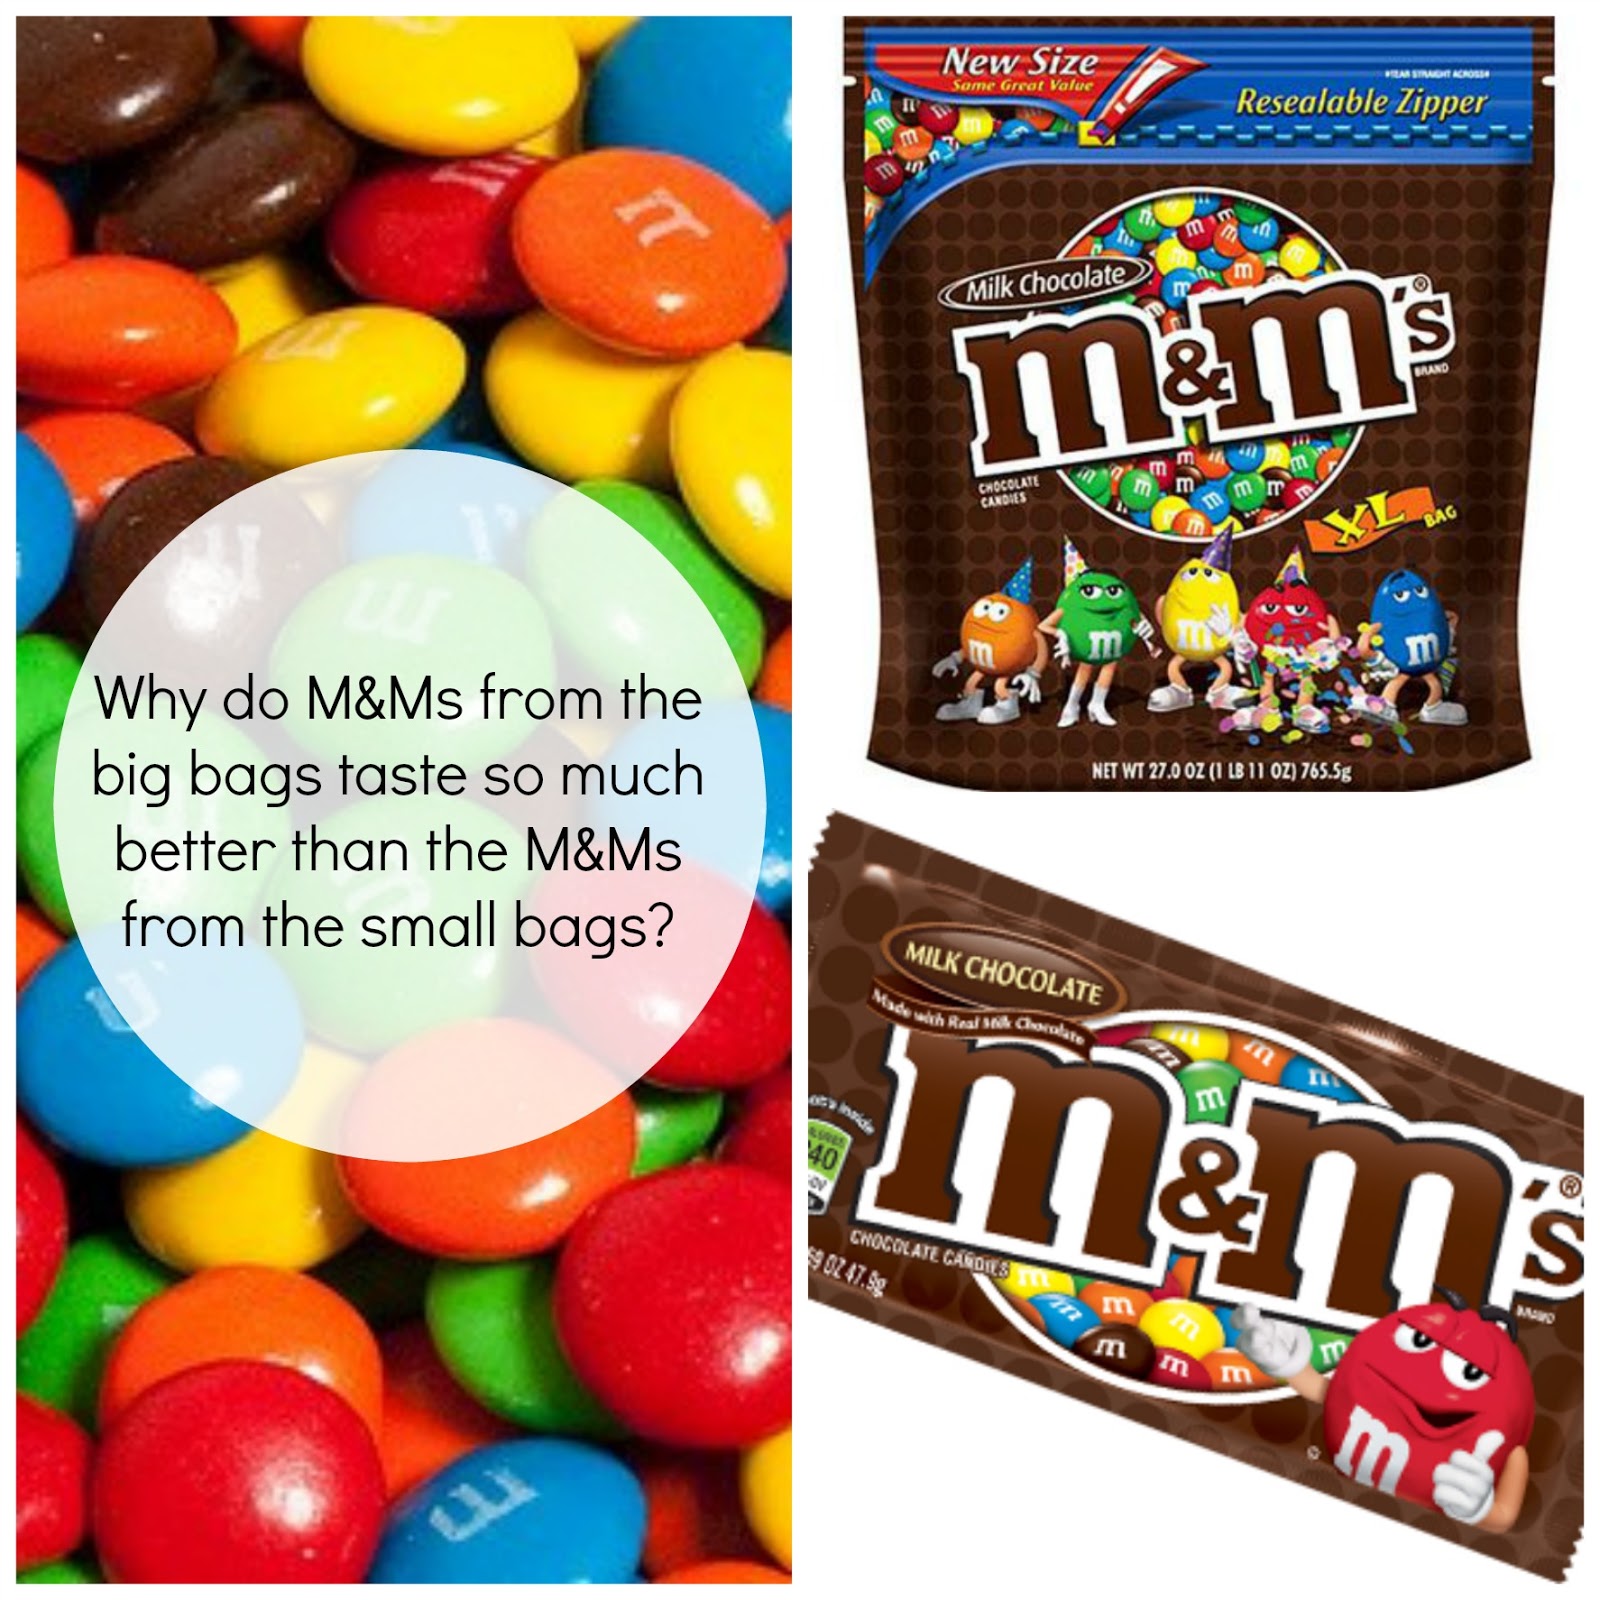 M&M'S Milk Chocolate Candy Party Size Bag, 38 oz - Ralphs